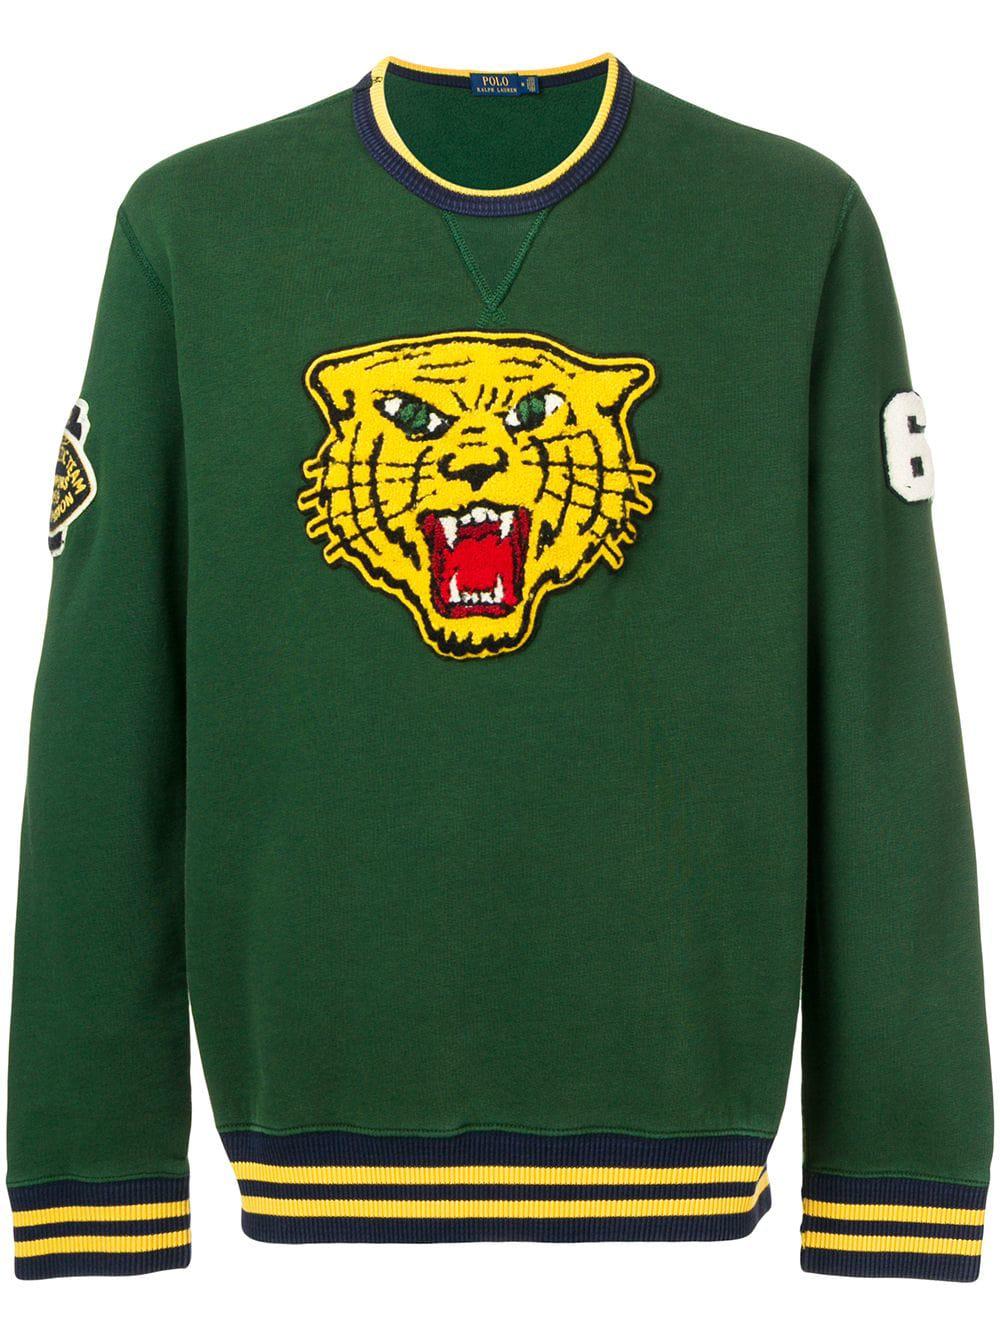 polo ralph lauren tiger sweater